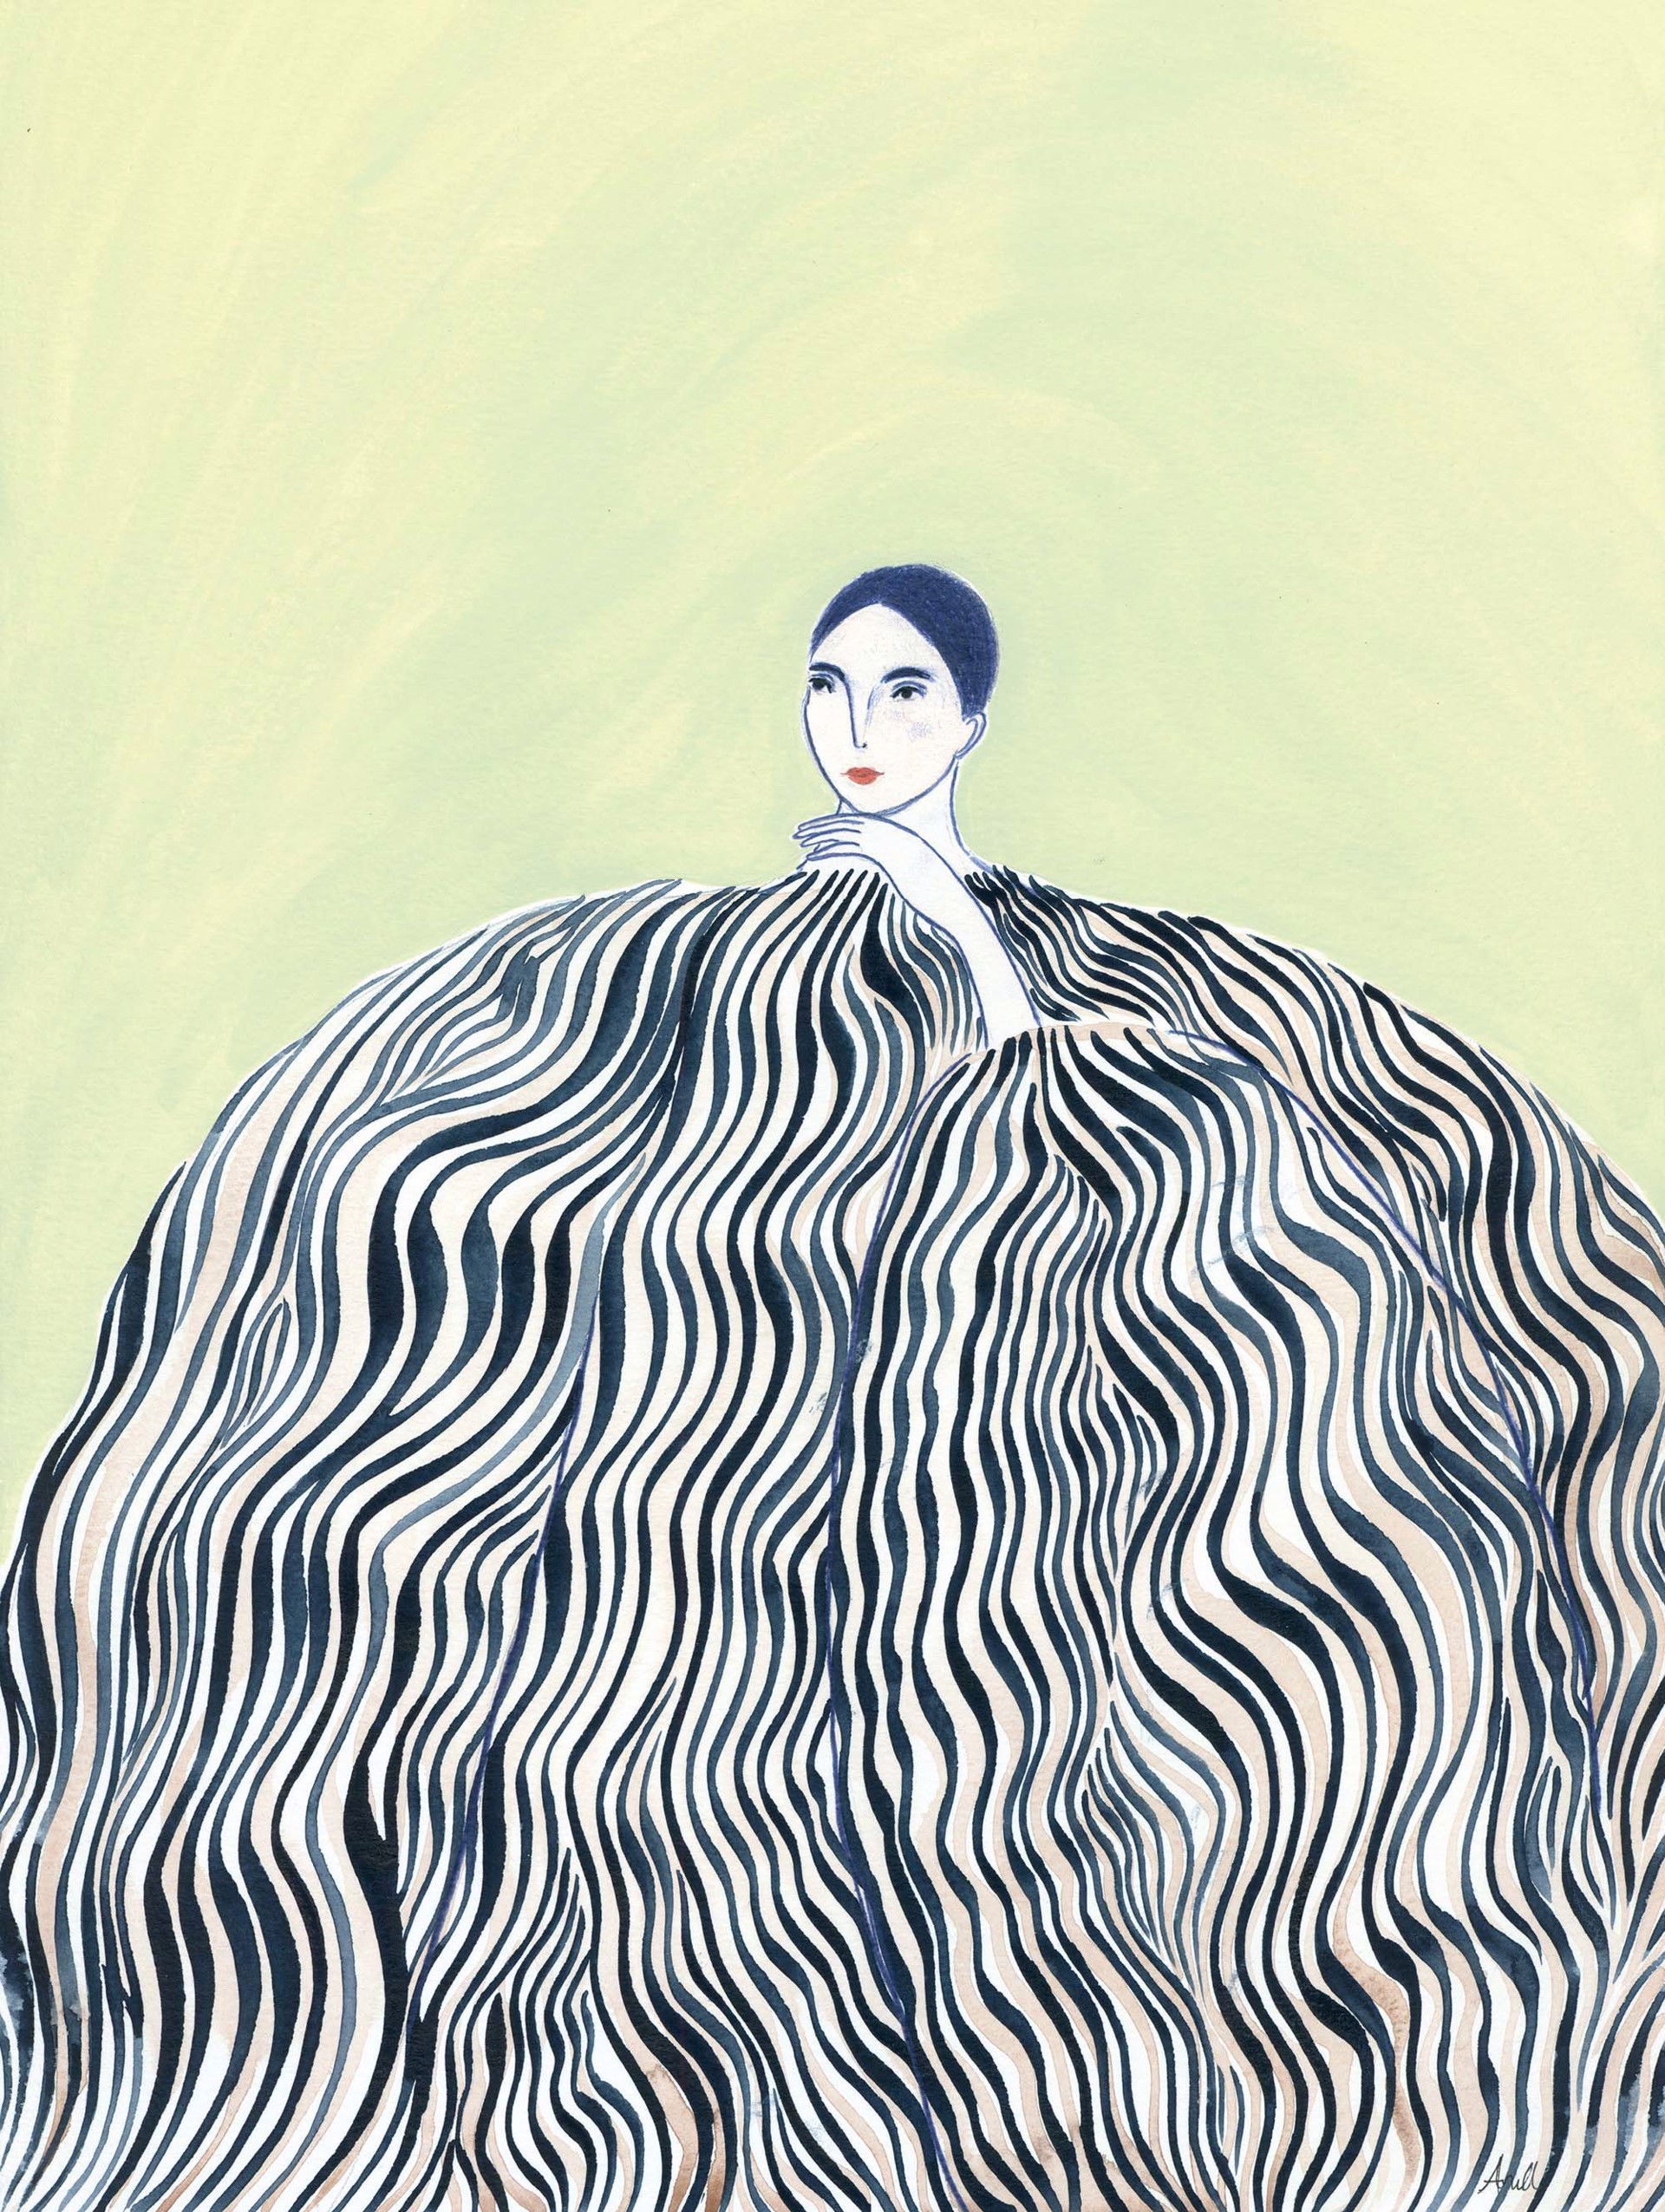 Zebra Coat by Anine Cecilie Iversen